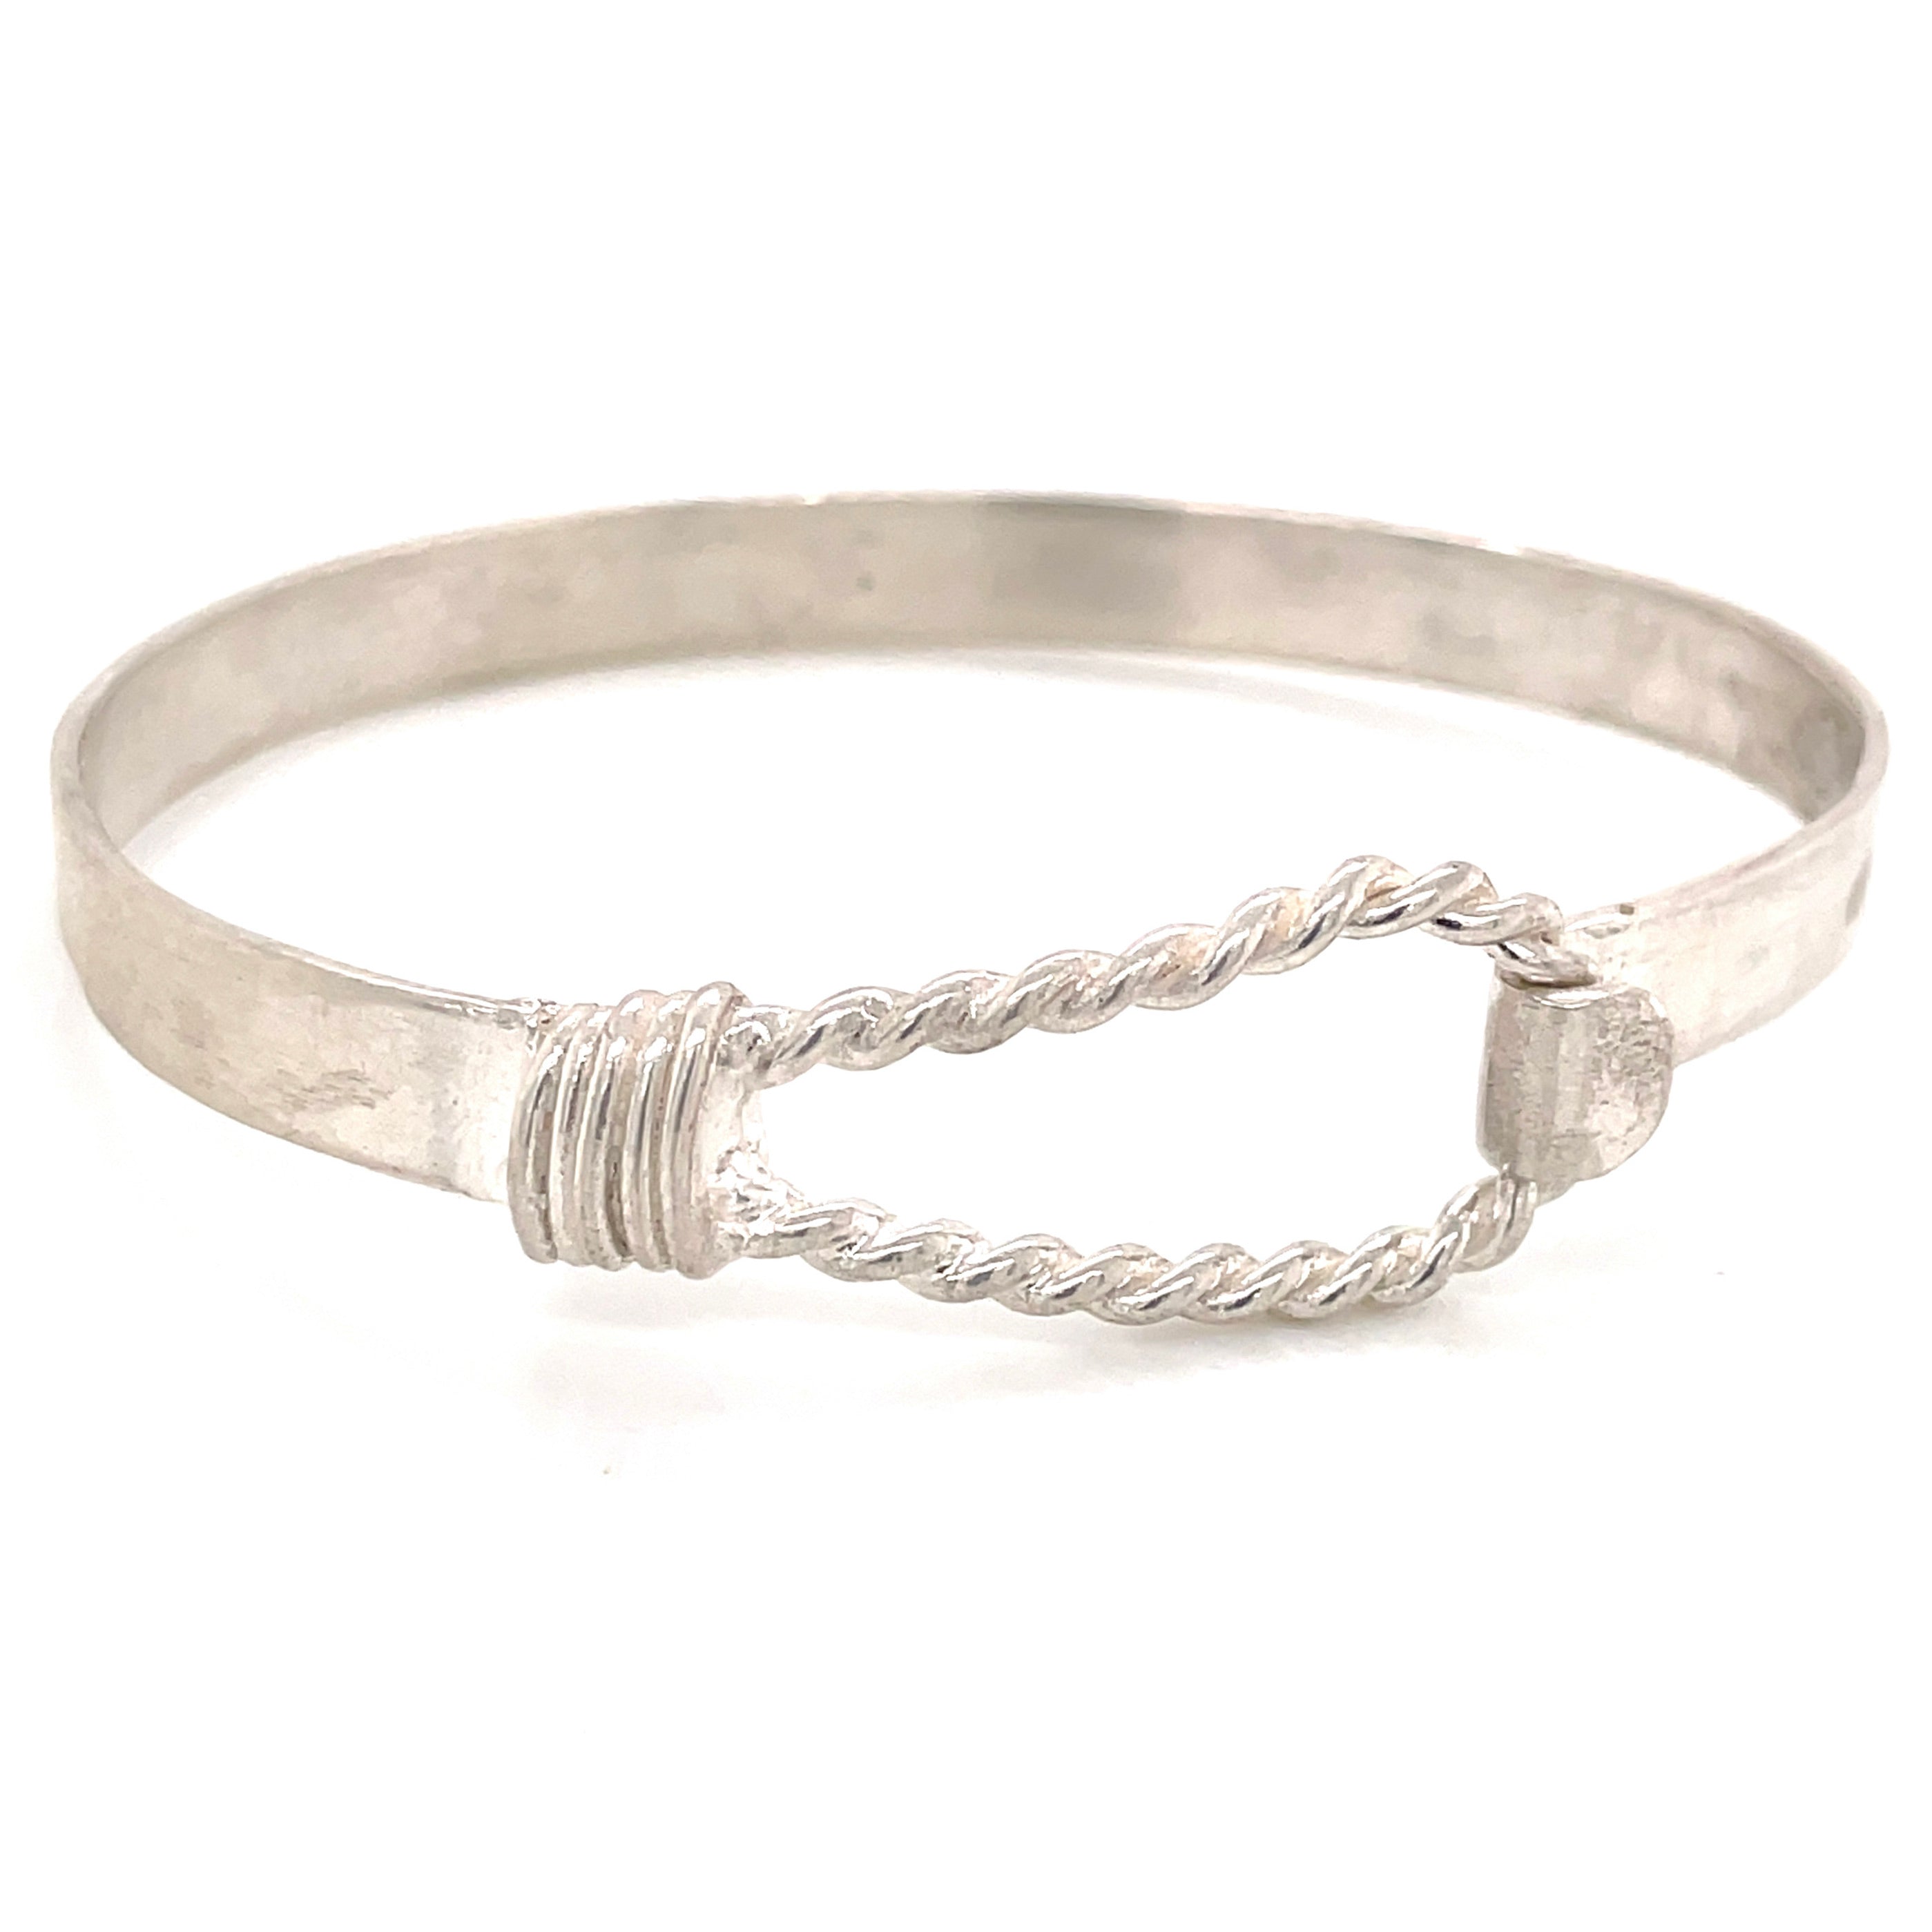 Sterling silver equestrian rope bracelet